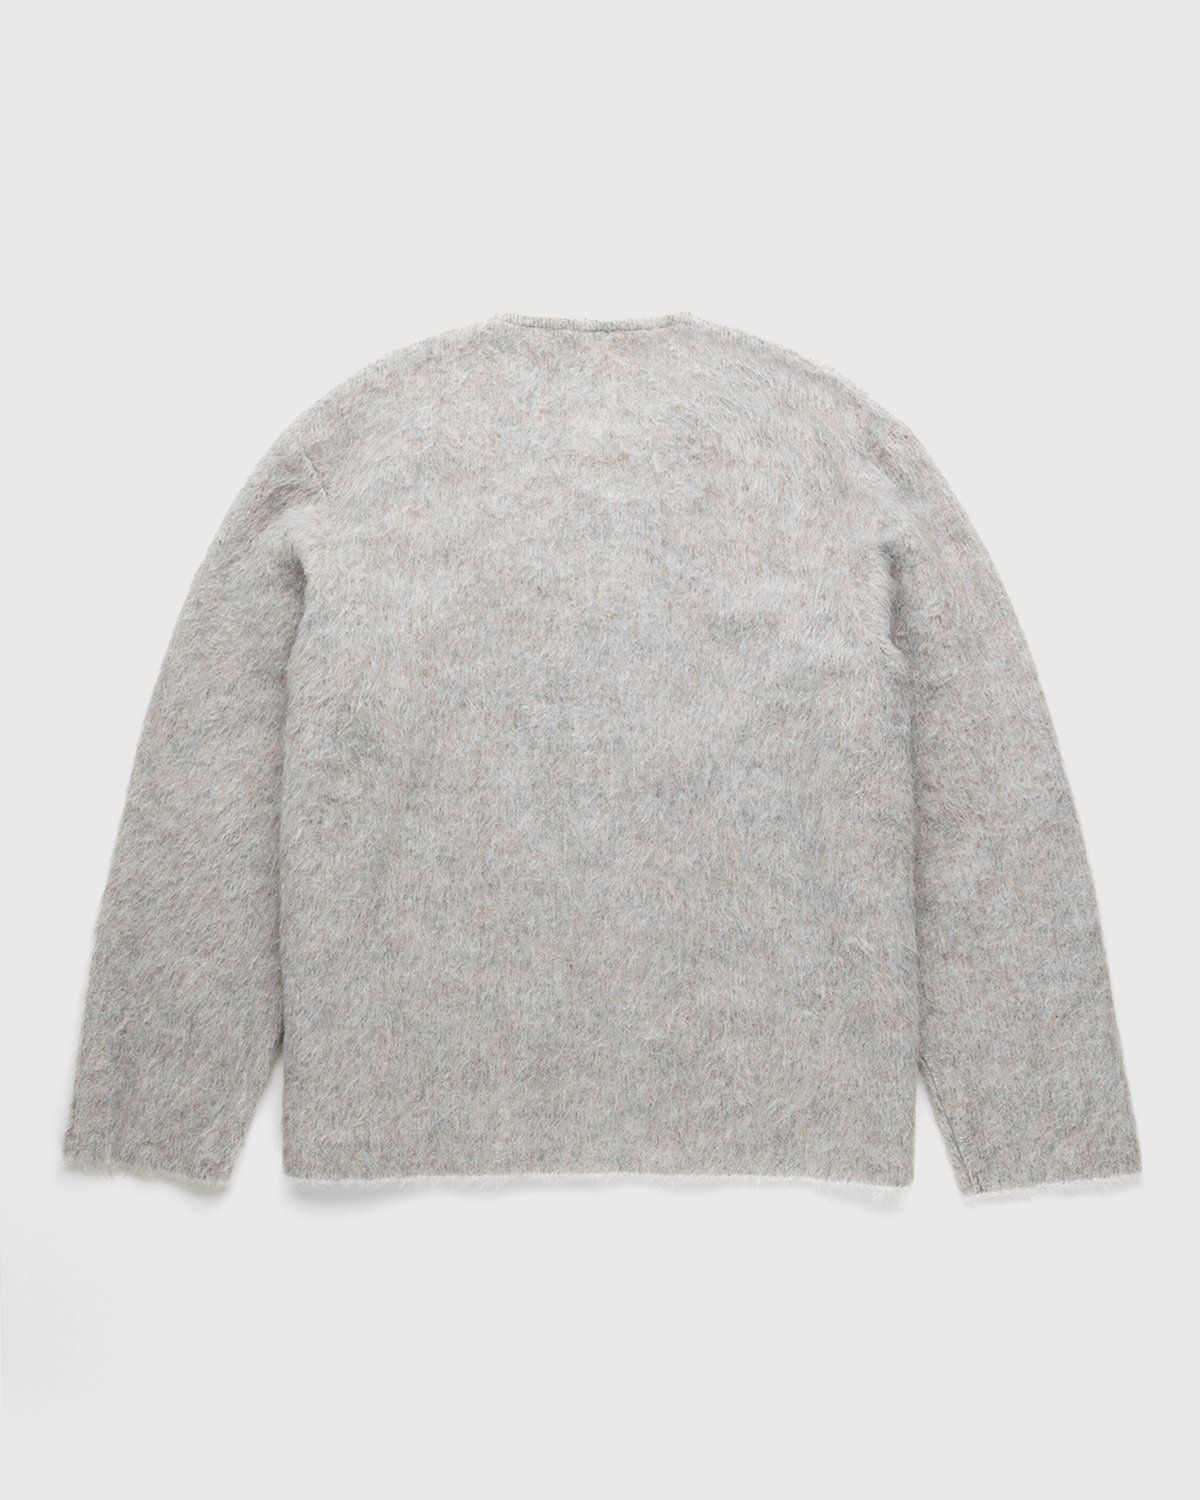 Our Legacy – Double Lock Sweater Grey Alpaca